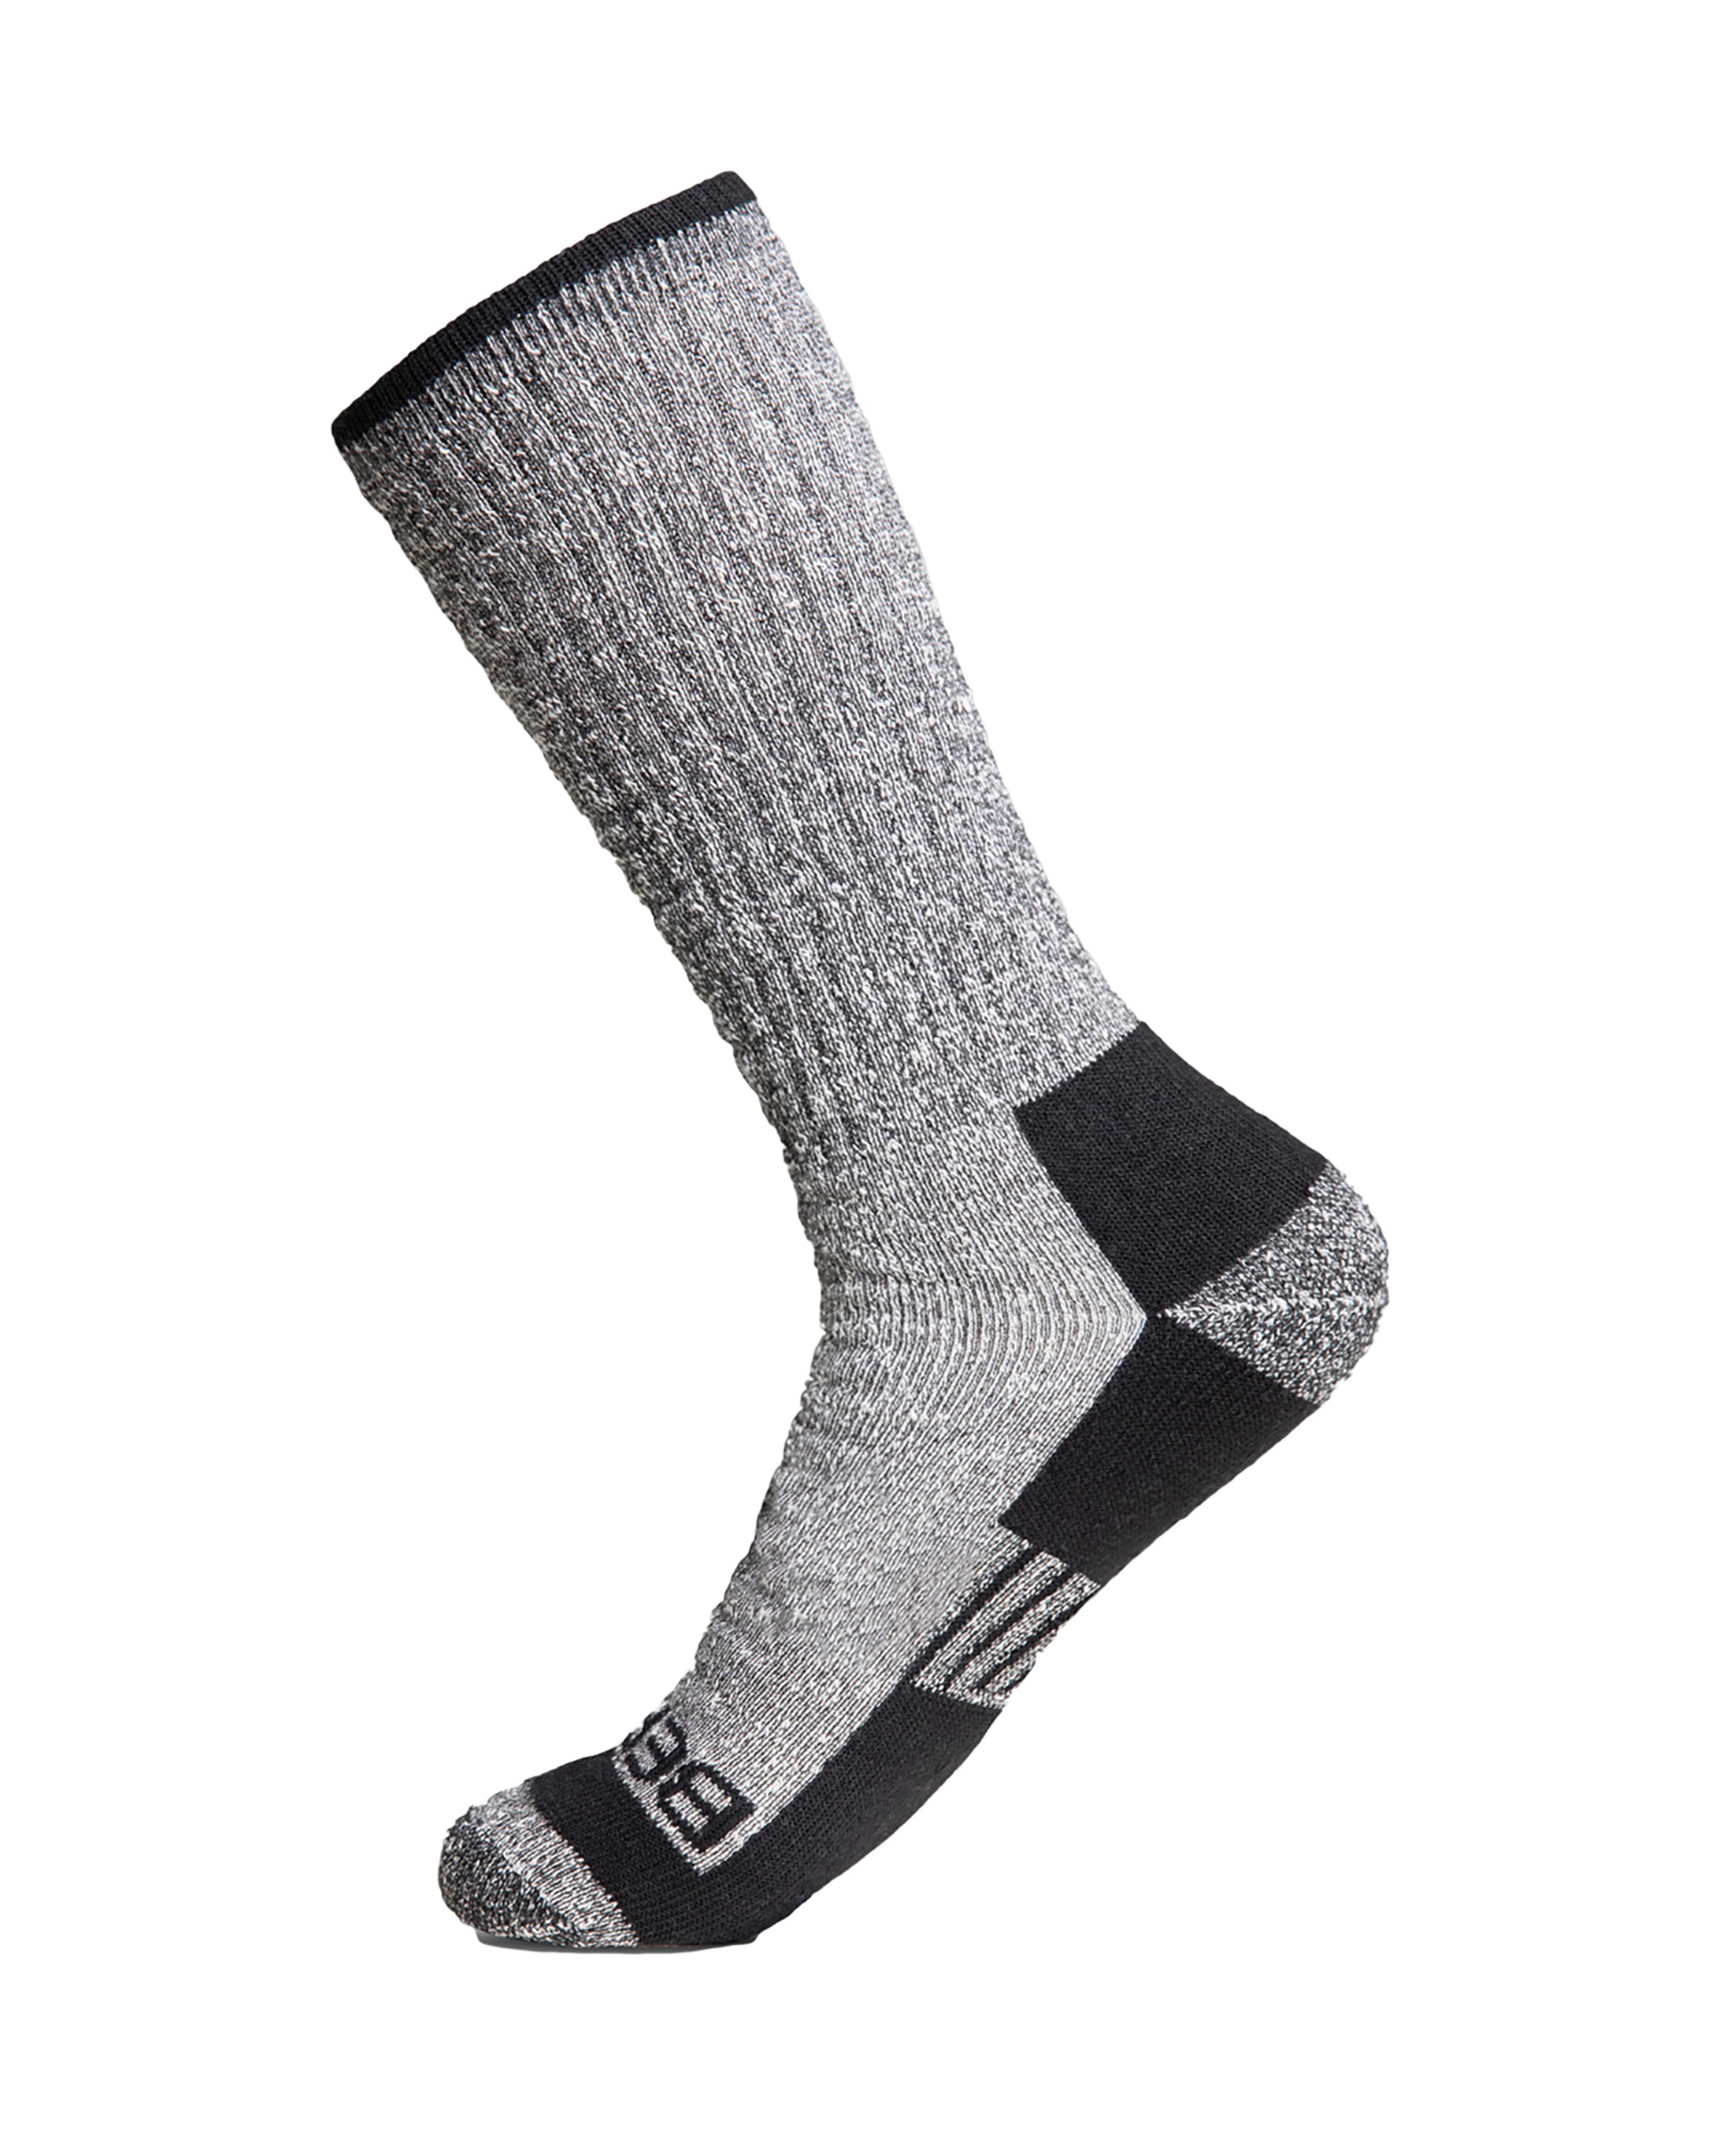 Berne Workwear® SK103 Men's Wool-Blend Comfort Boot Socks 3 Pack